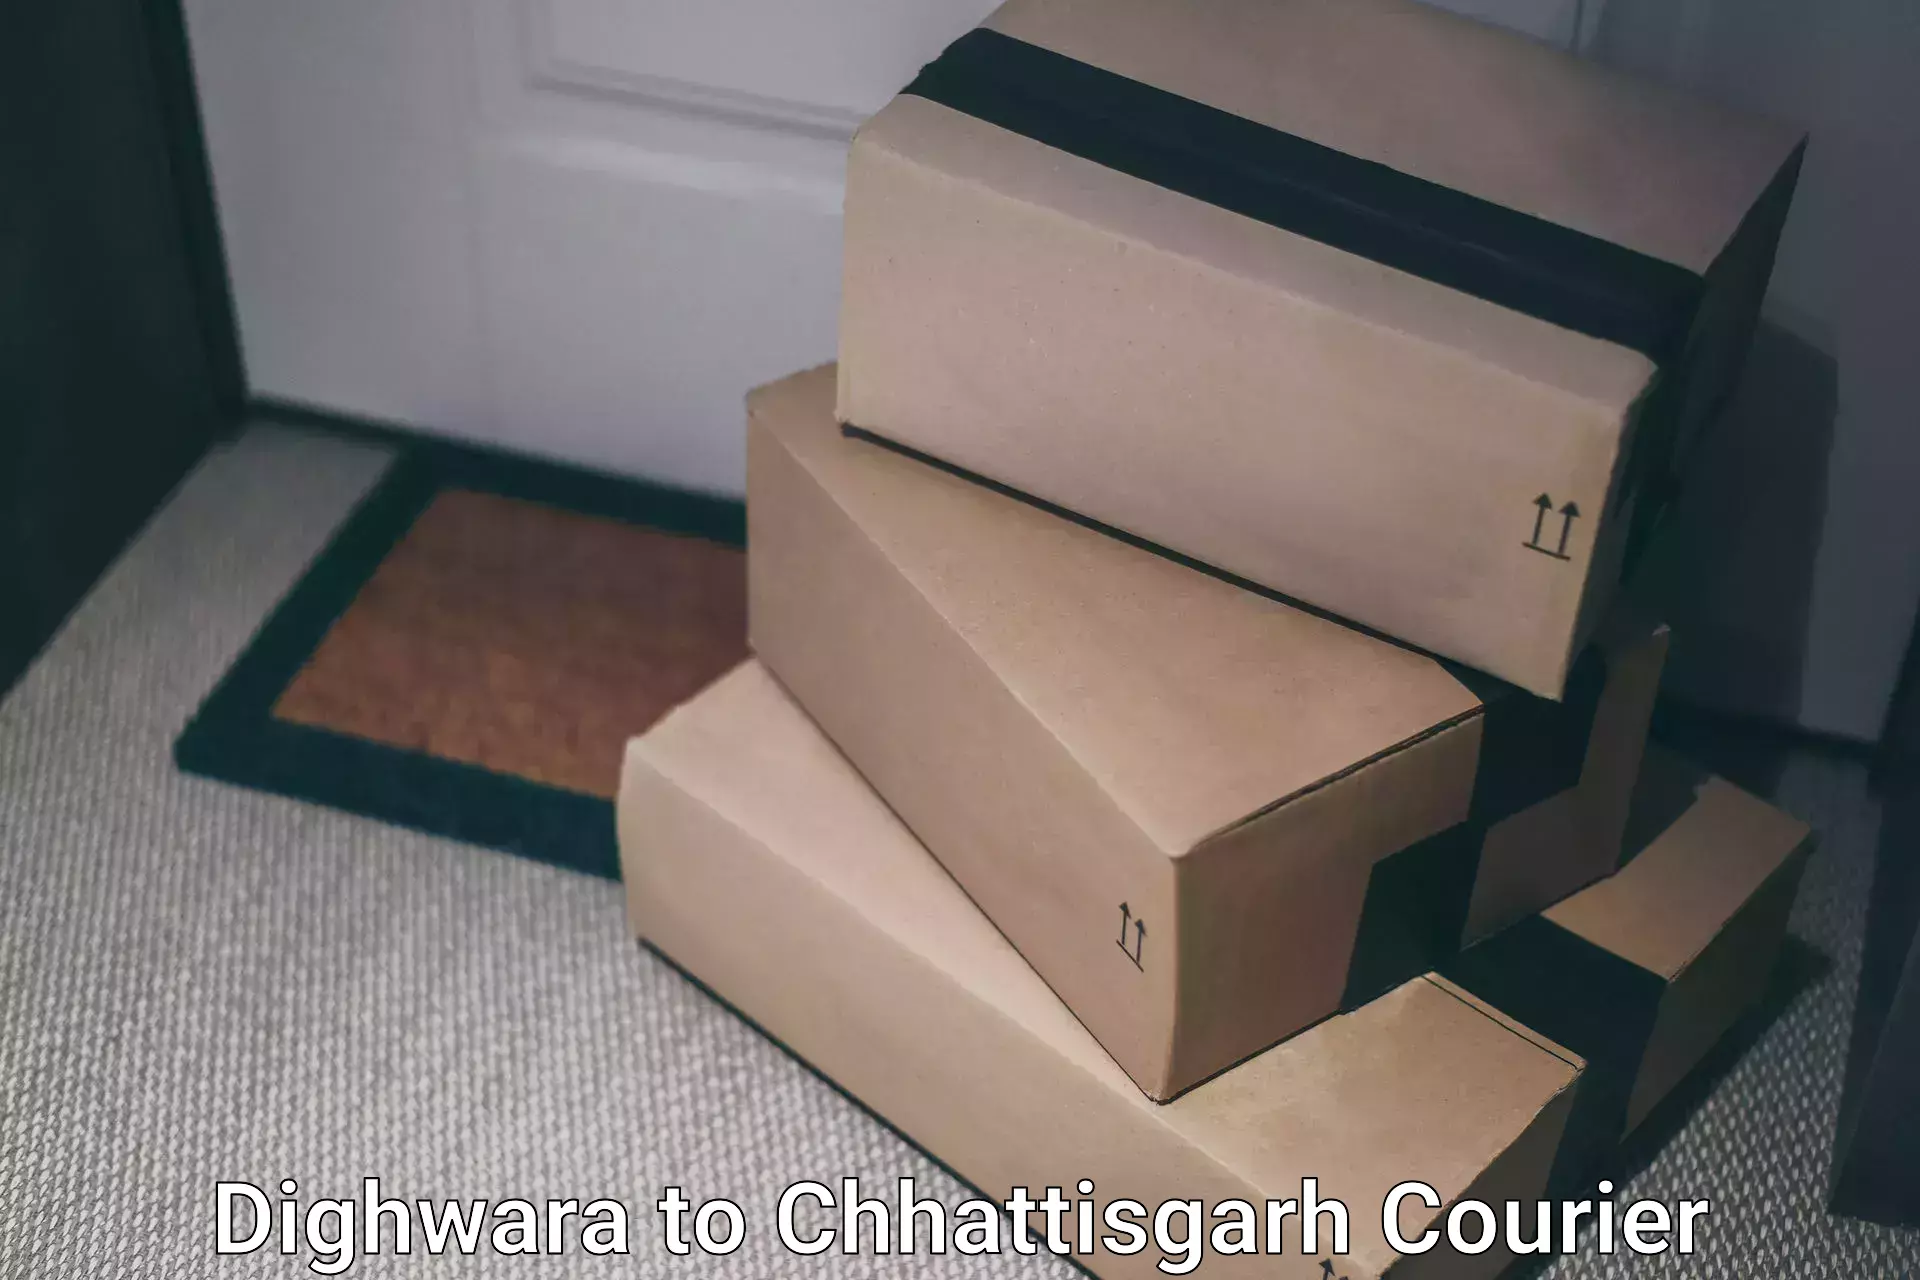 Courier service comparison Dighwara to Chhattisgarh